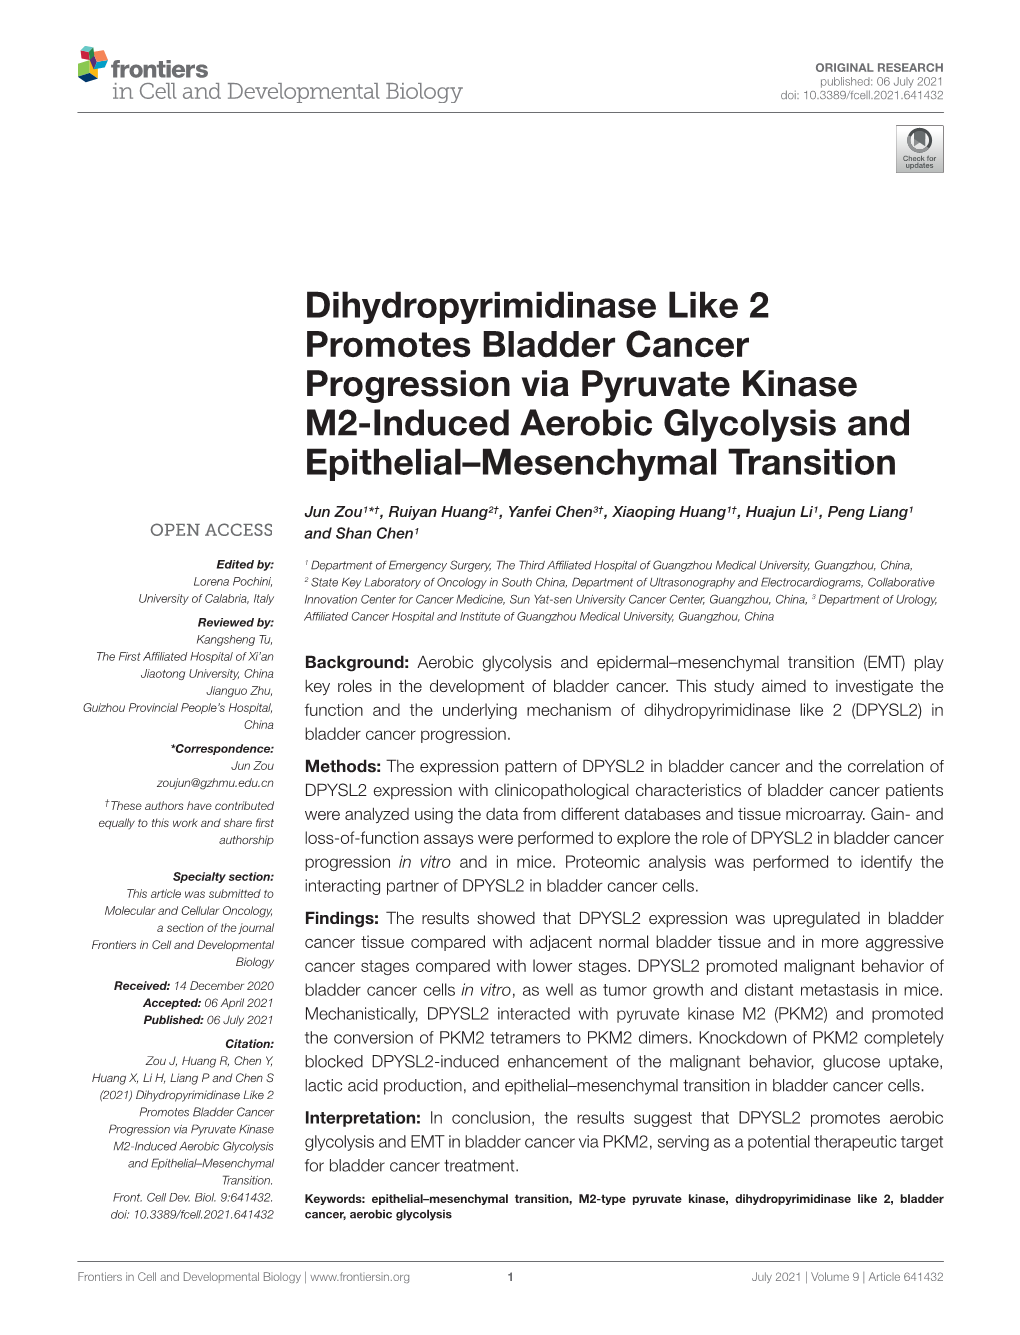 Dihydropyrimidinase Like 2 Promotes Bladder Cancer Progression Via Pyruvate Kinase M2-Induced Aerobic Glycolysis and Epithelial–Mesenchymal Transition